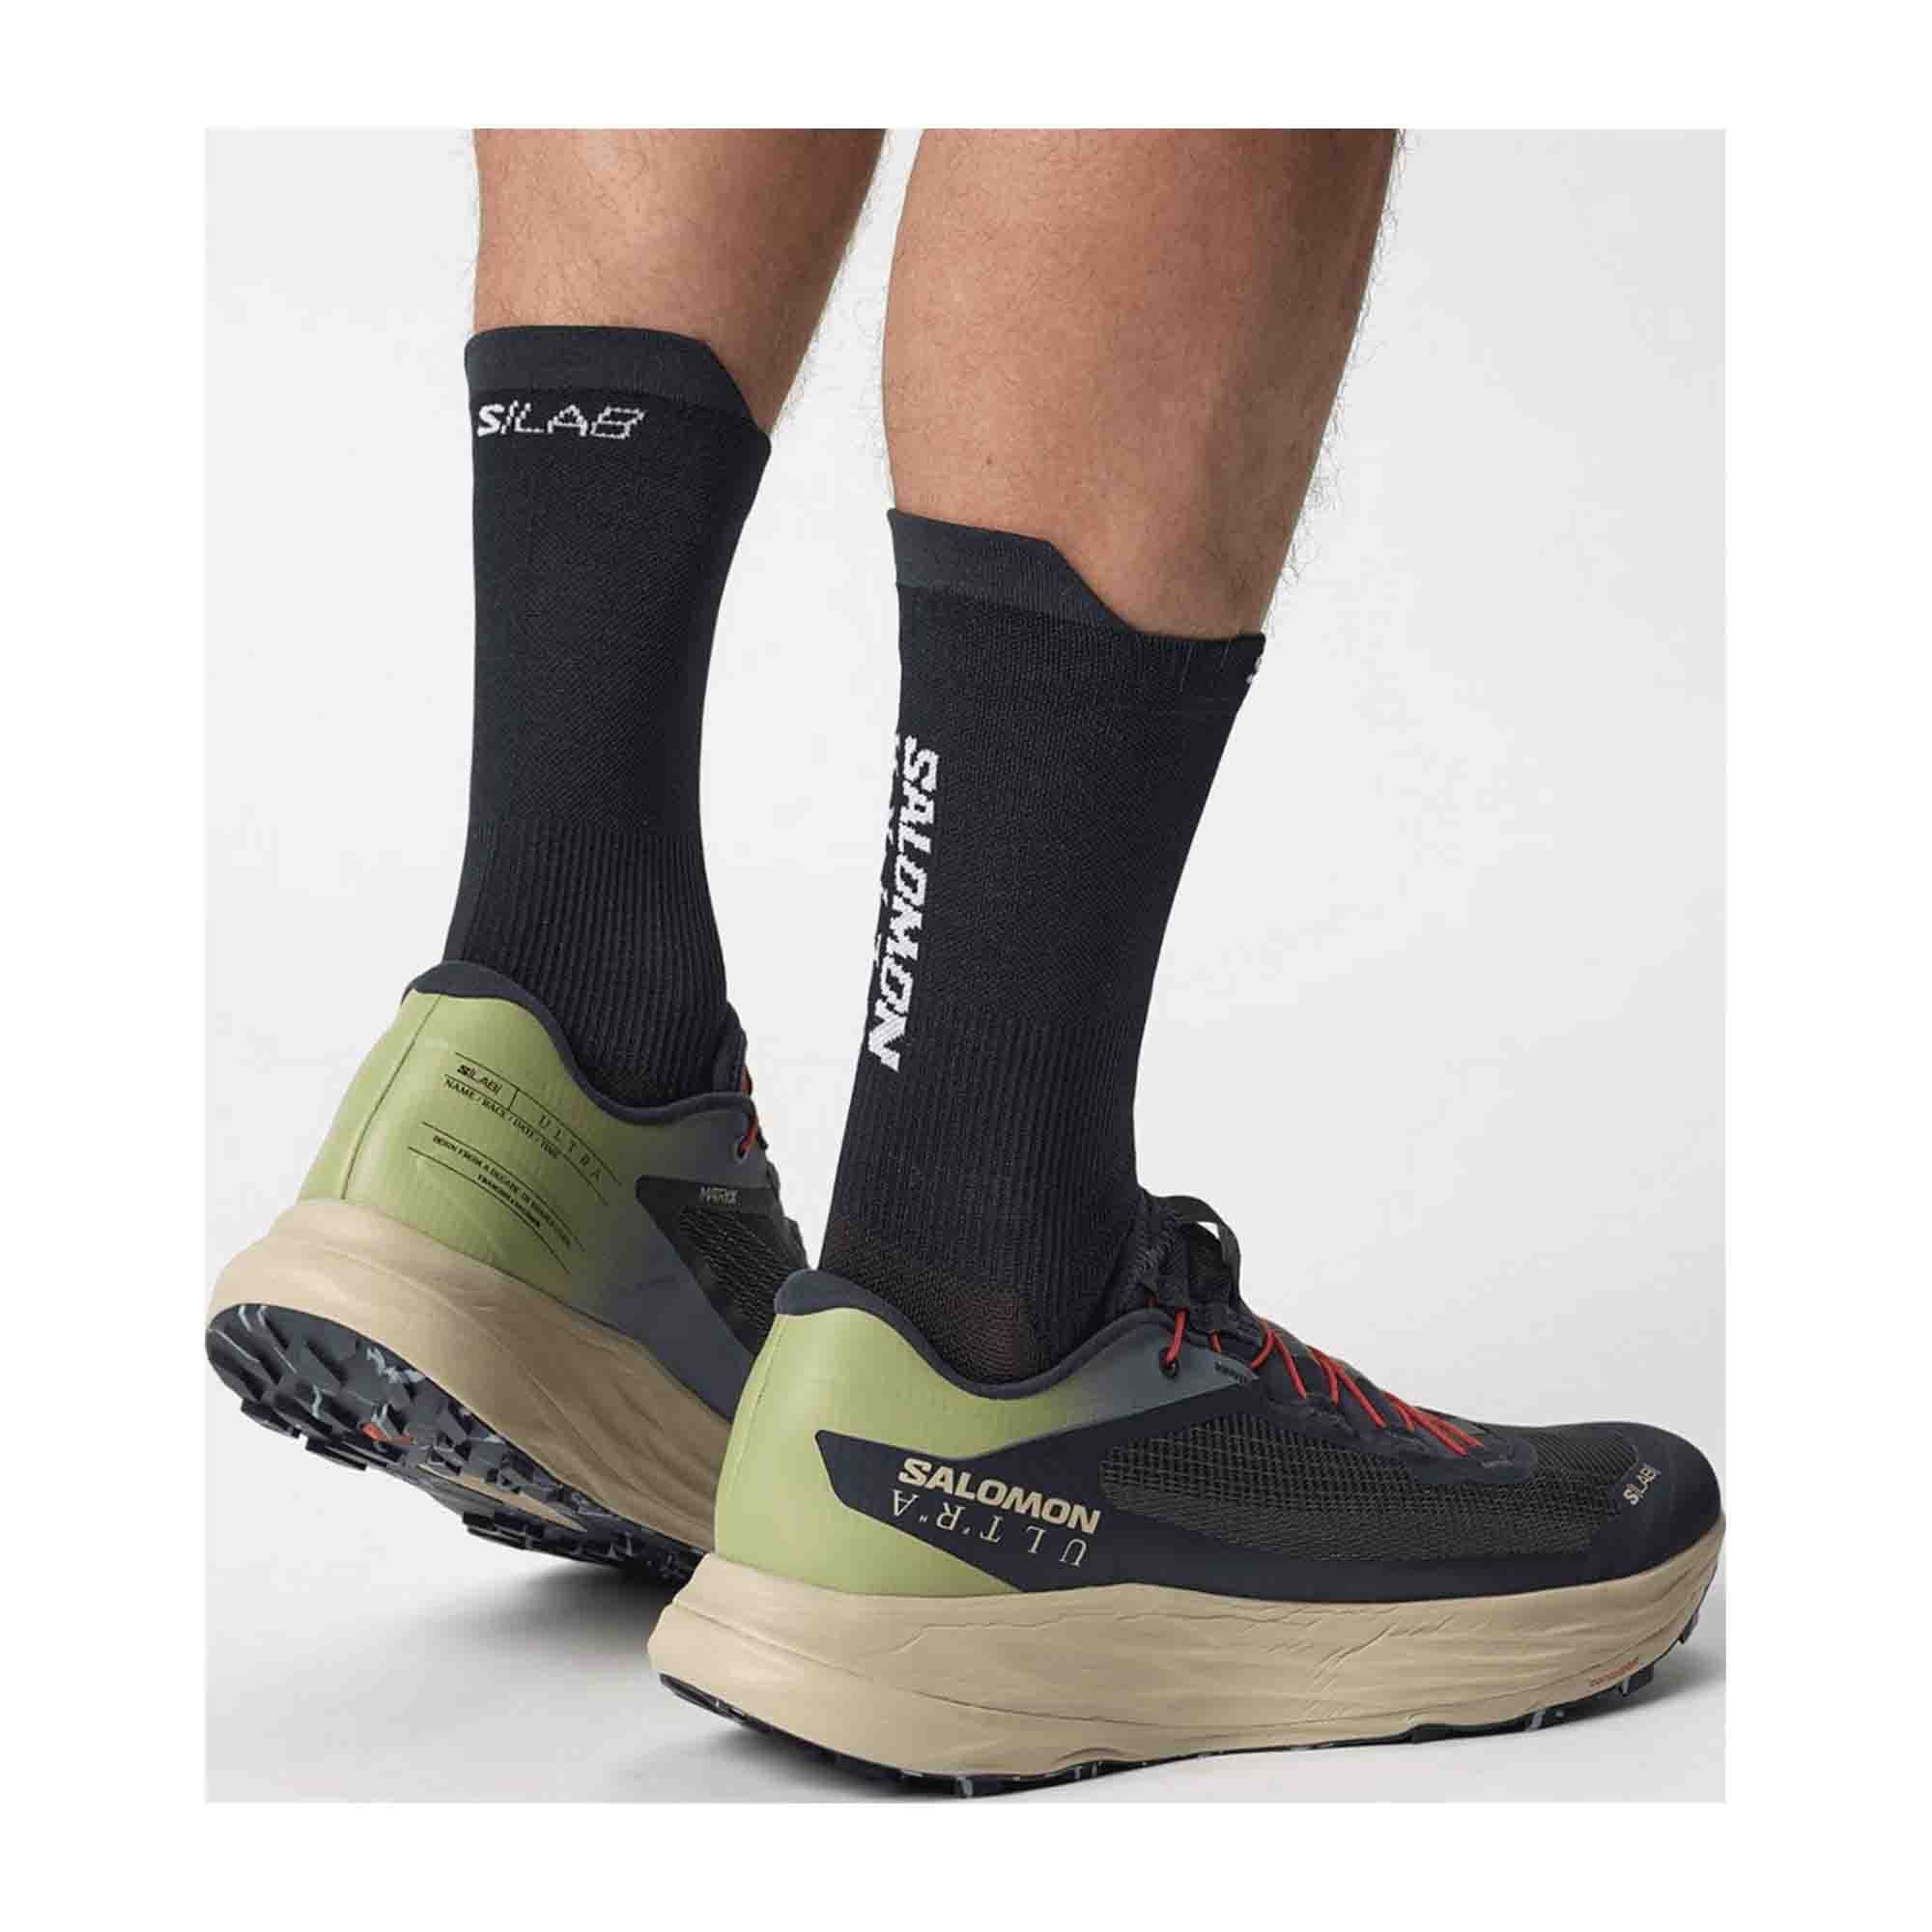 Salomon S/LAB ULTRA for men, green, shoes